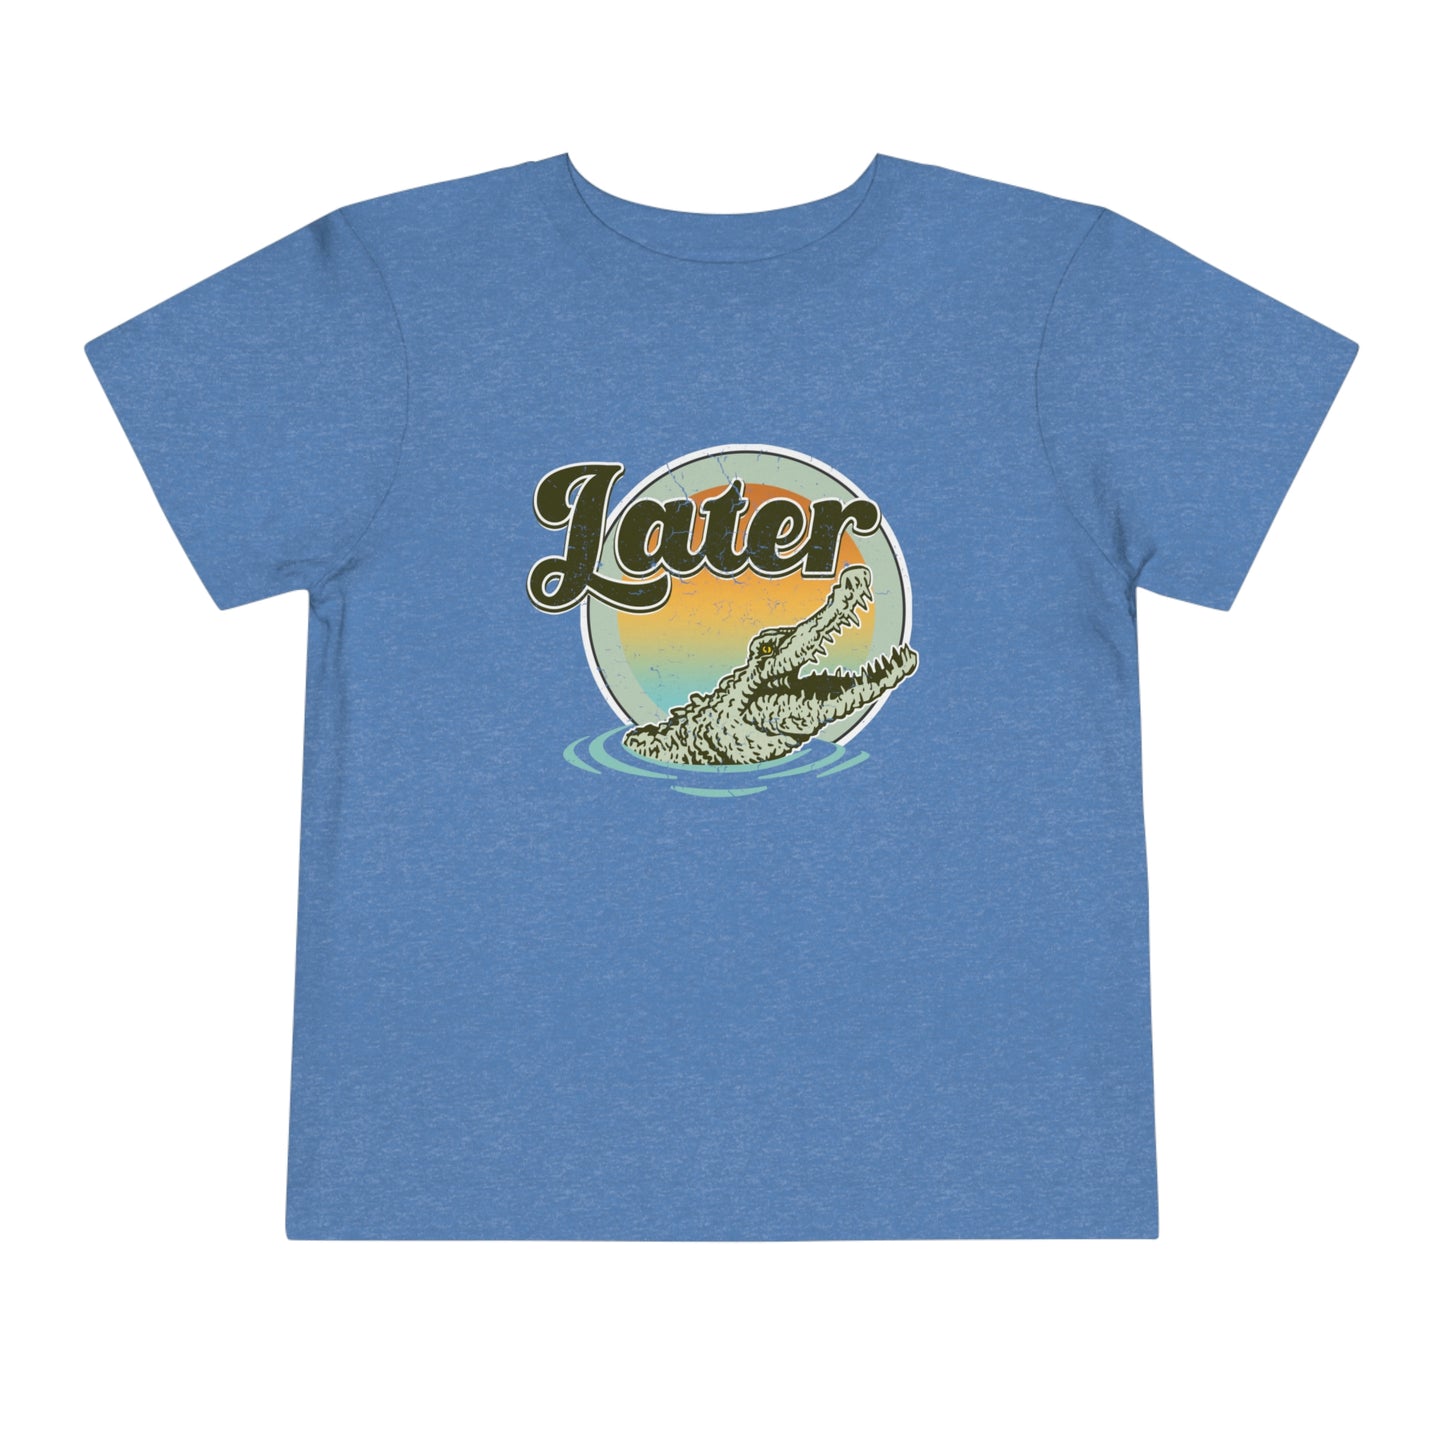 "Later Gator" Toddler Short Sleeve Tee (2T-5T)